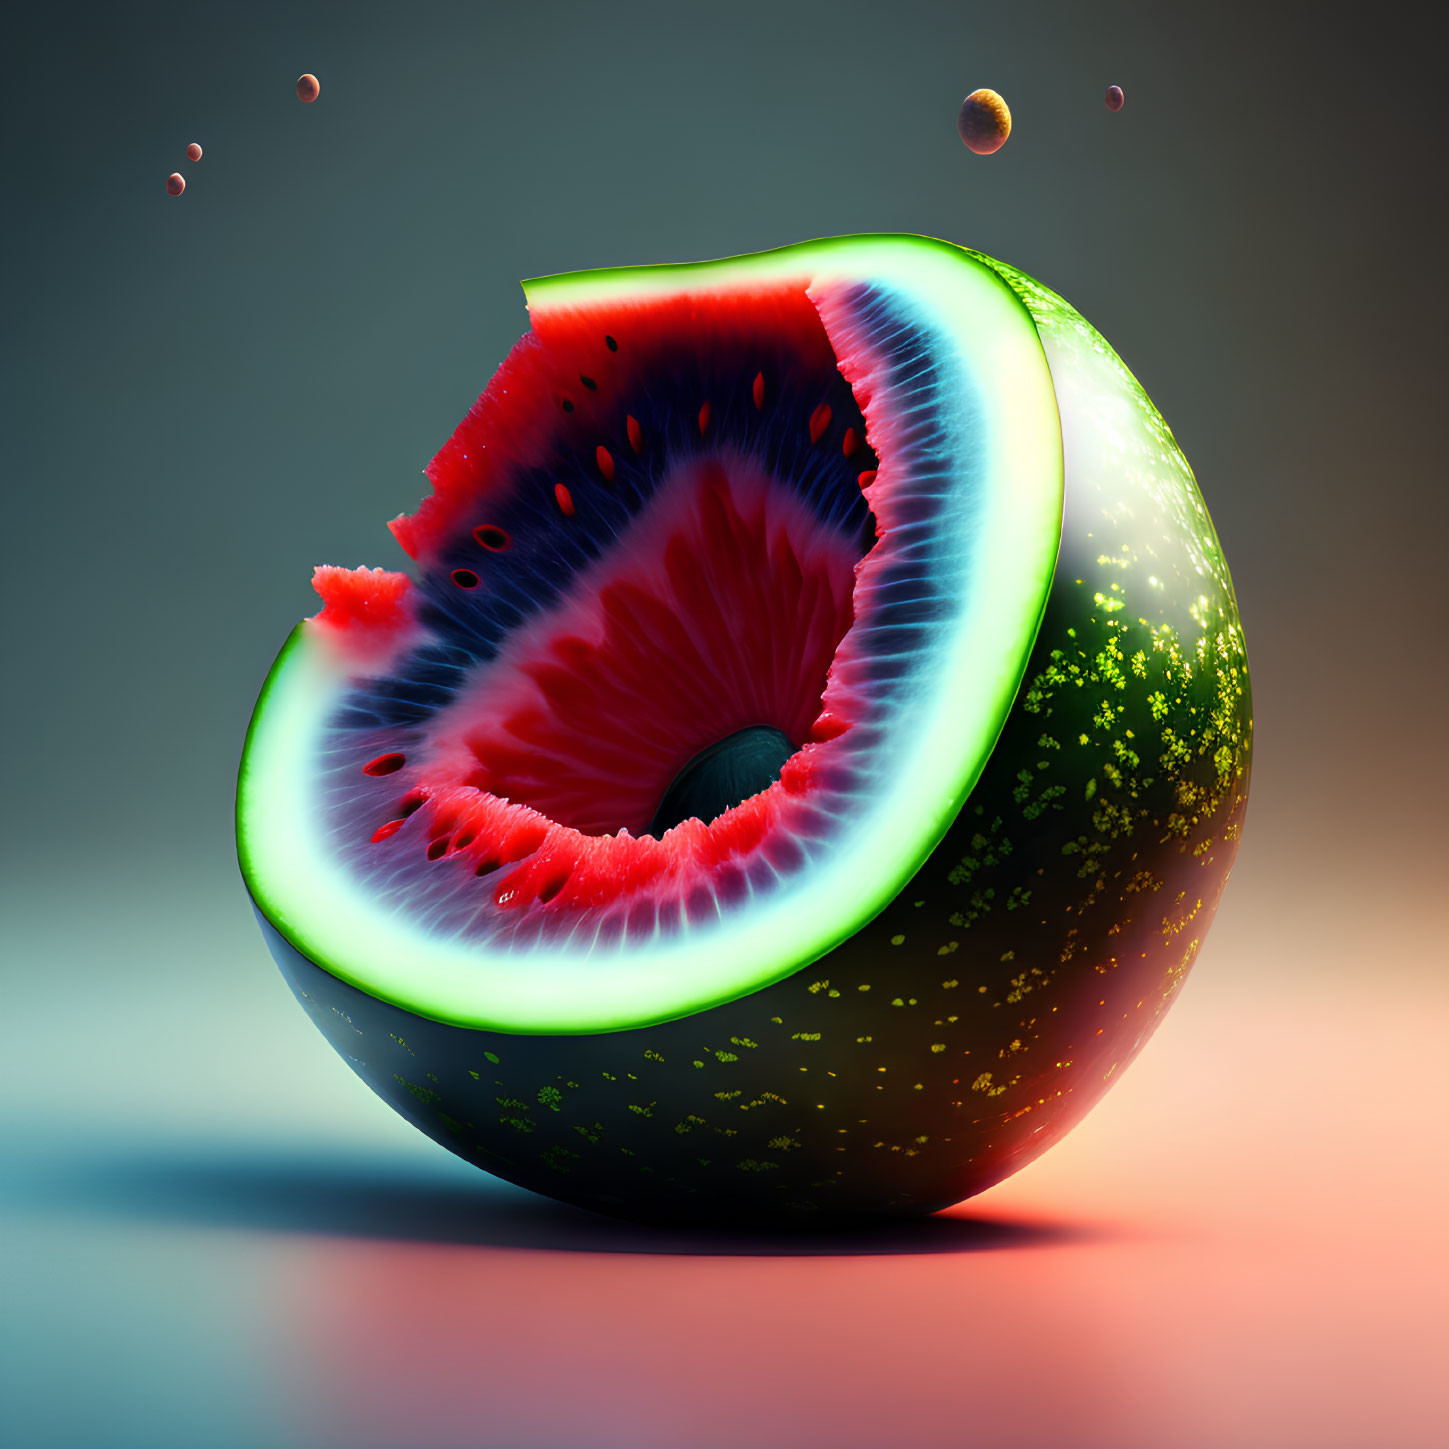 Surreal digital art: Watermelon slice transforms into swirling vortex